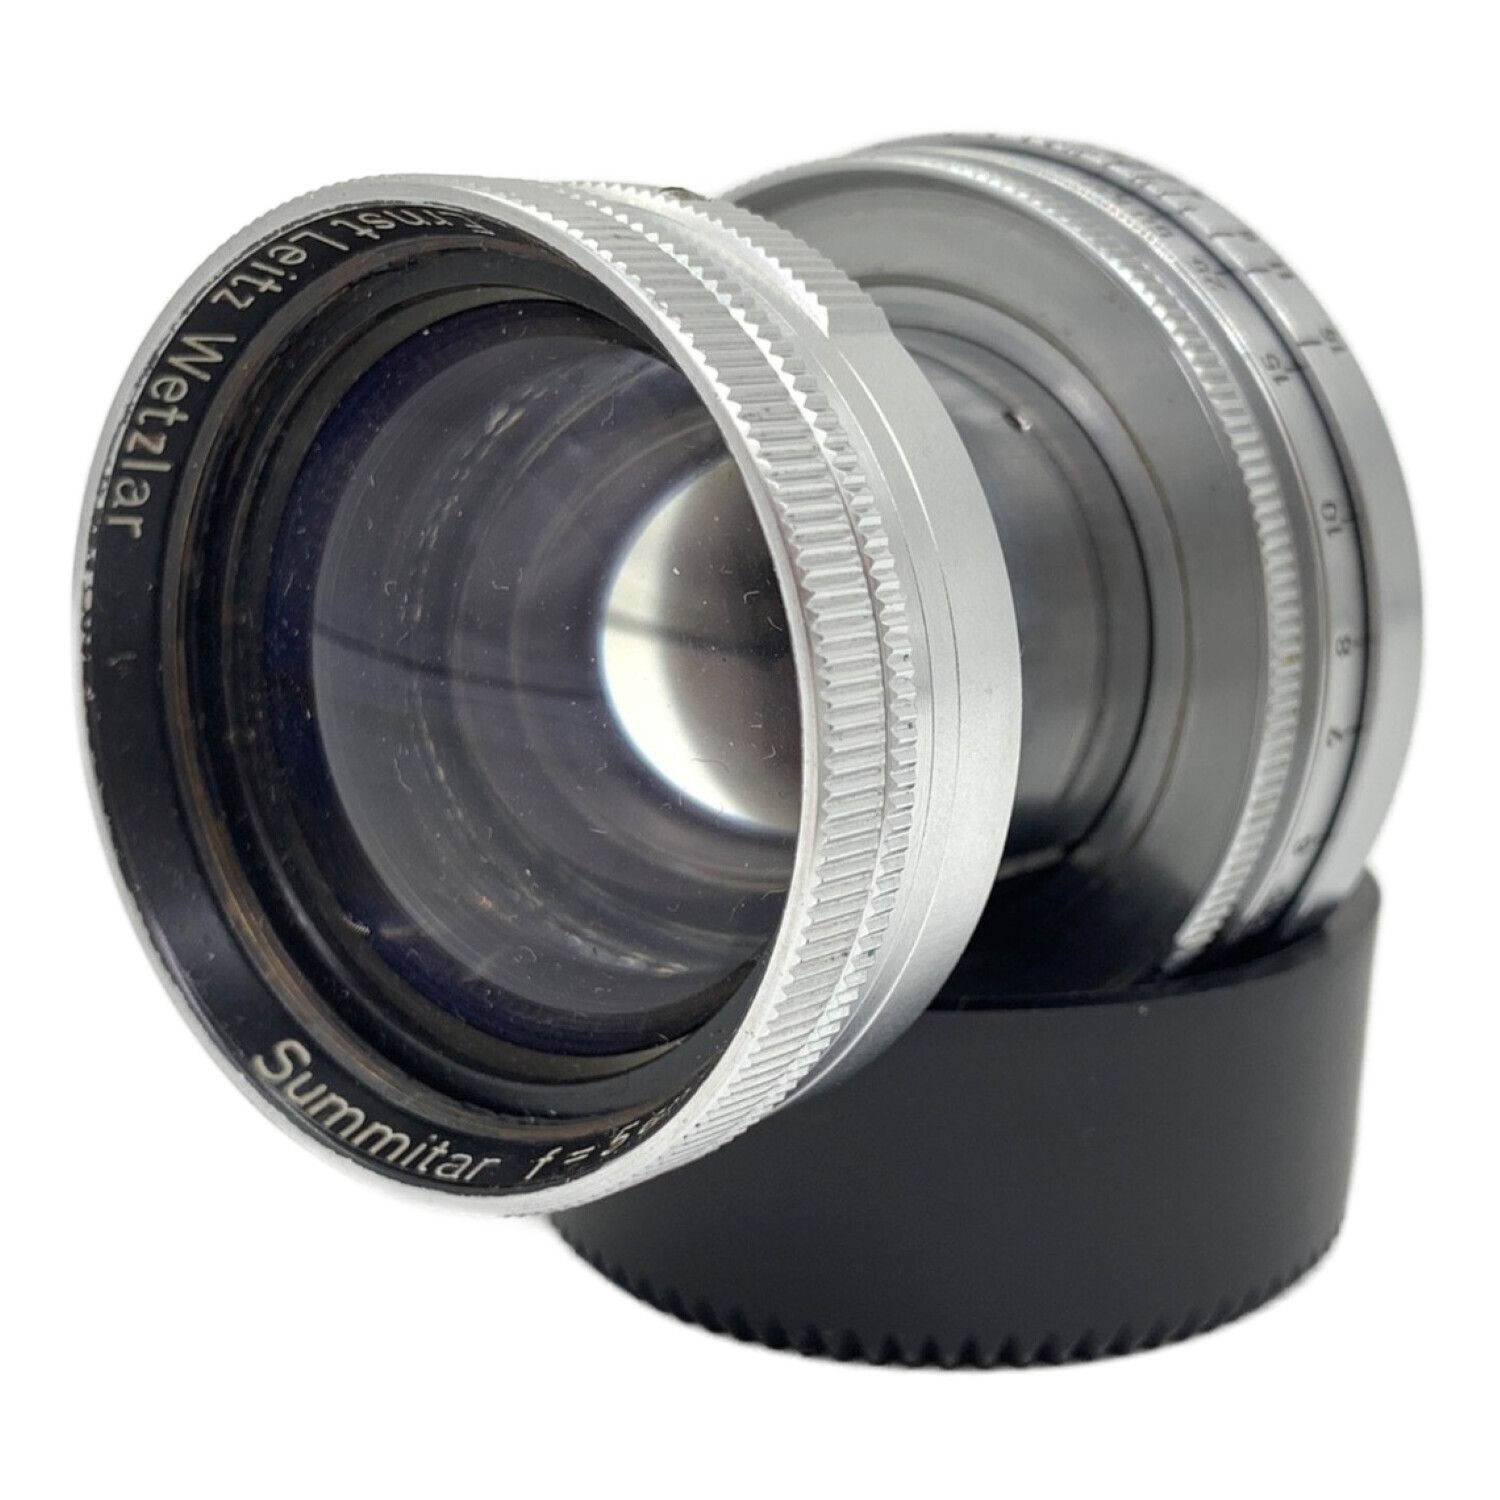 Leica Summitar 5cm f2 Ernst Leitz5560